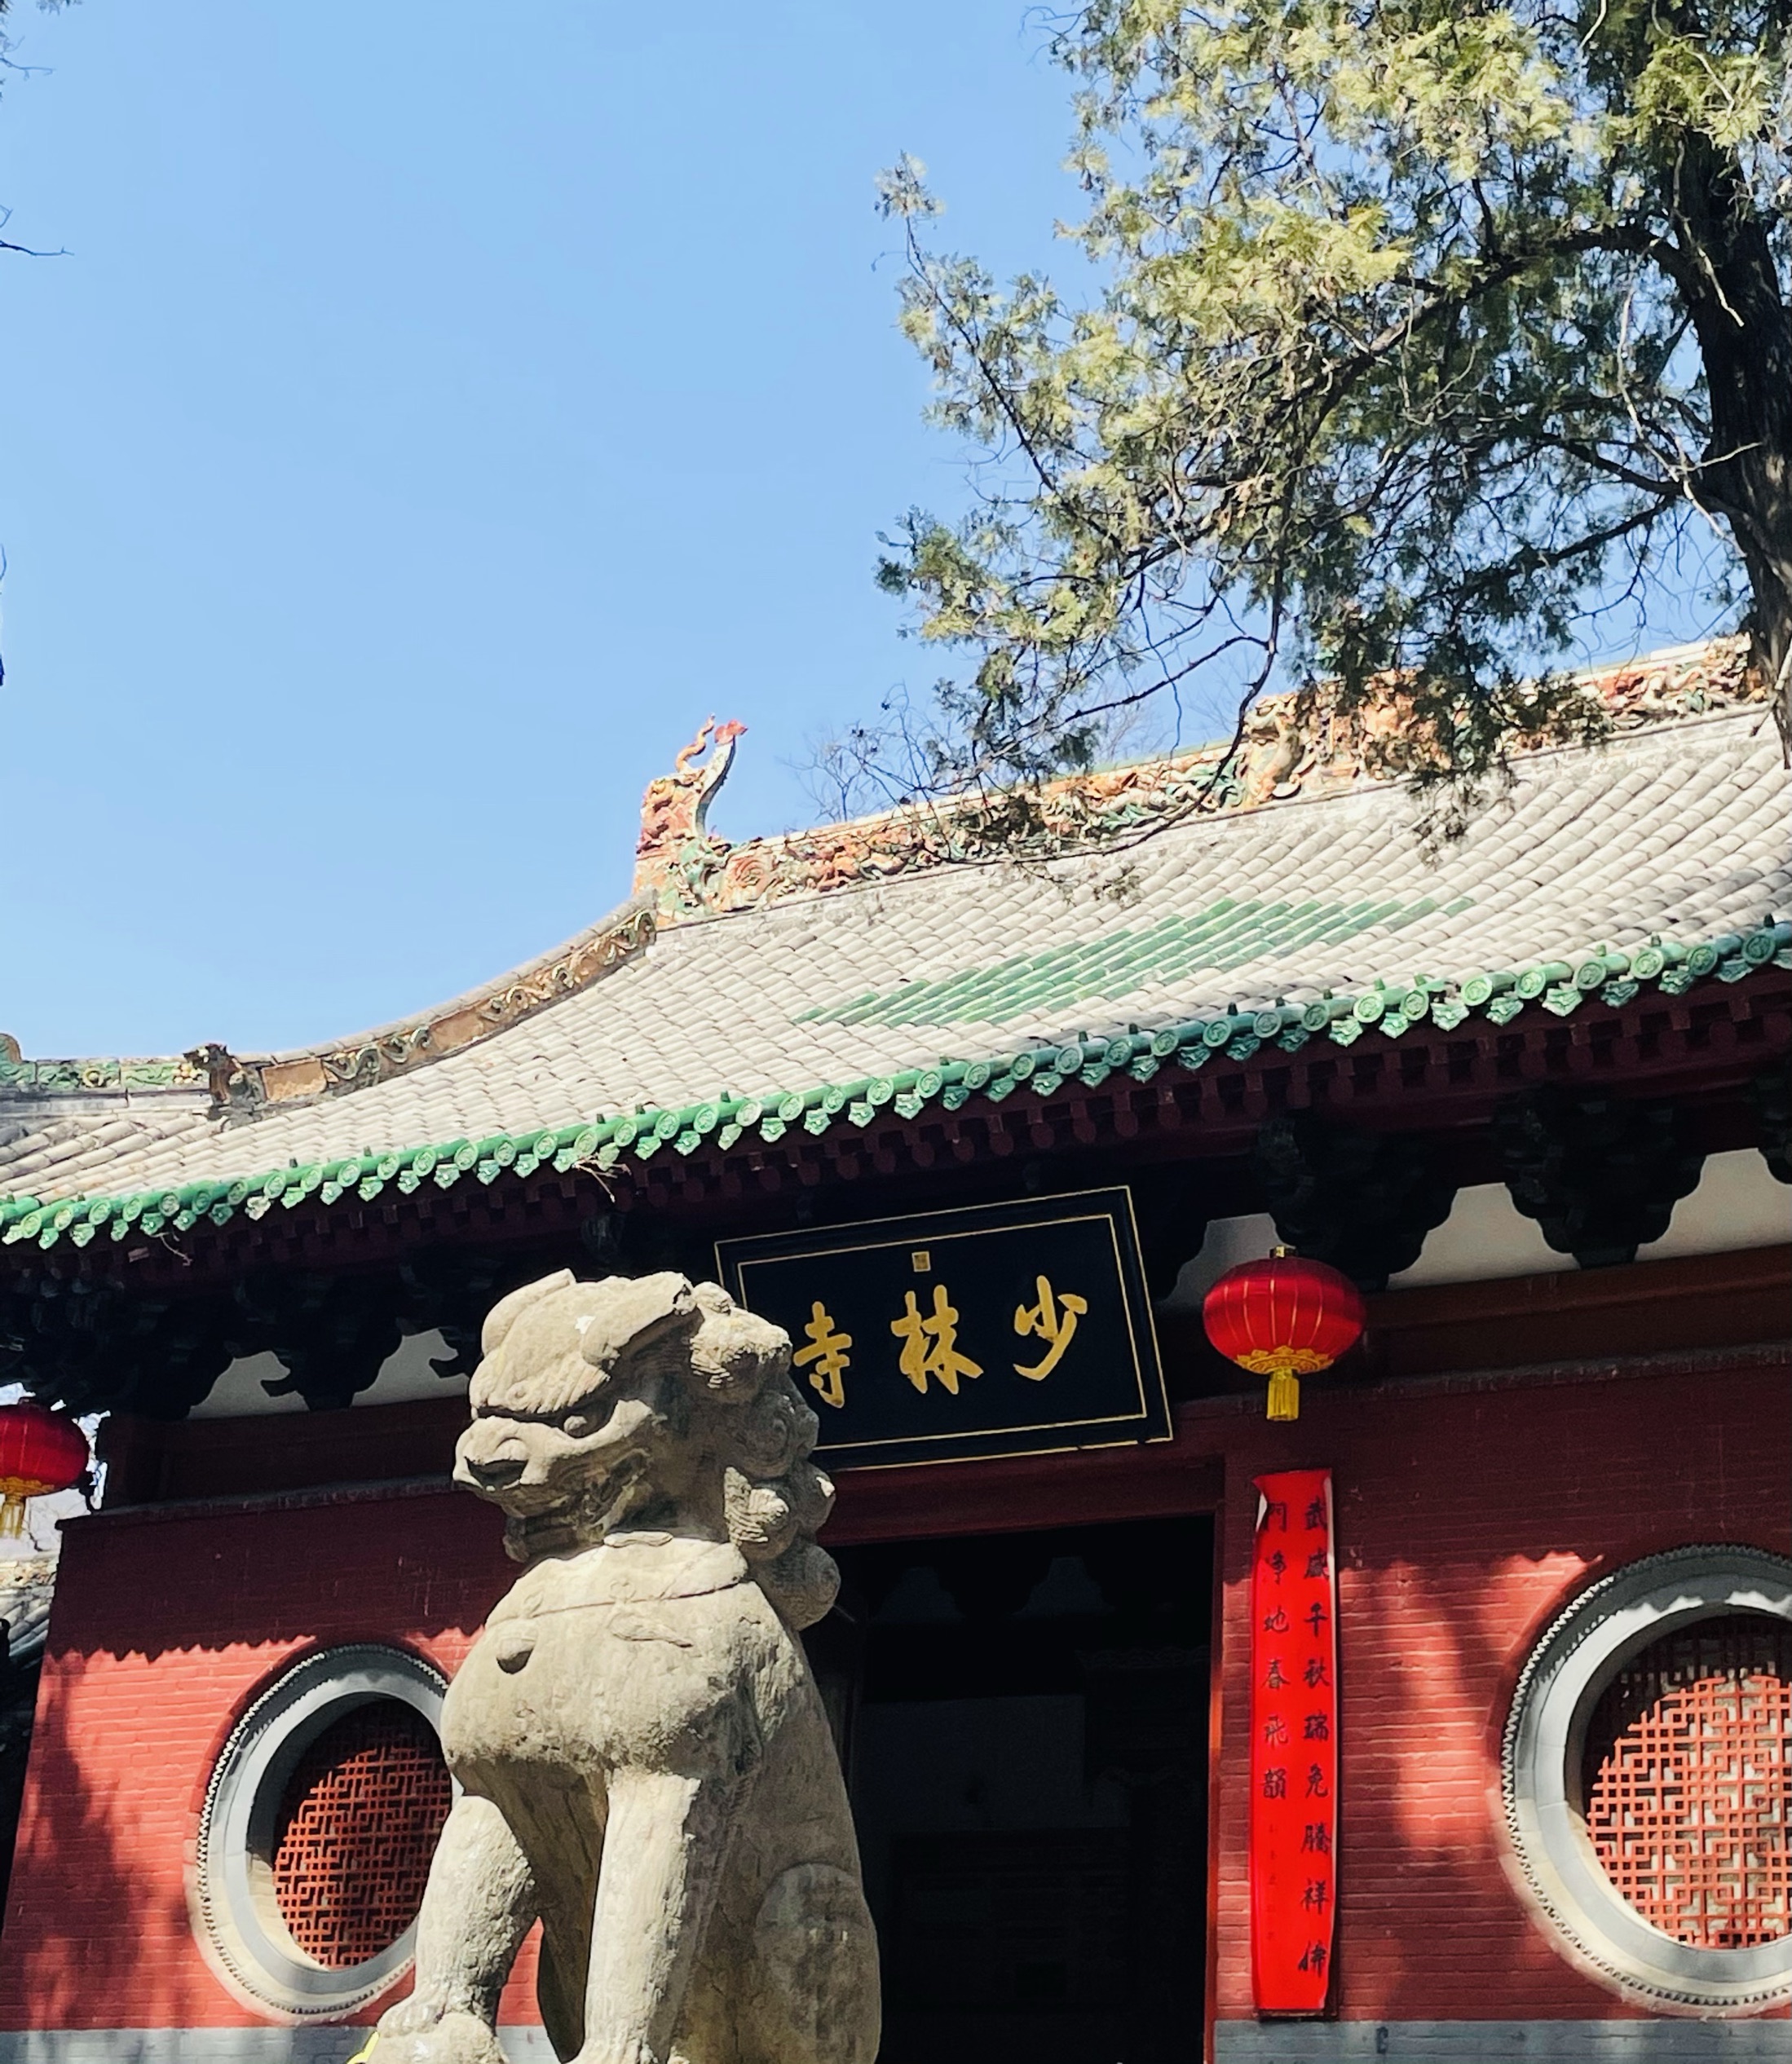 Henan Shaolin Temple